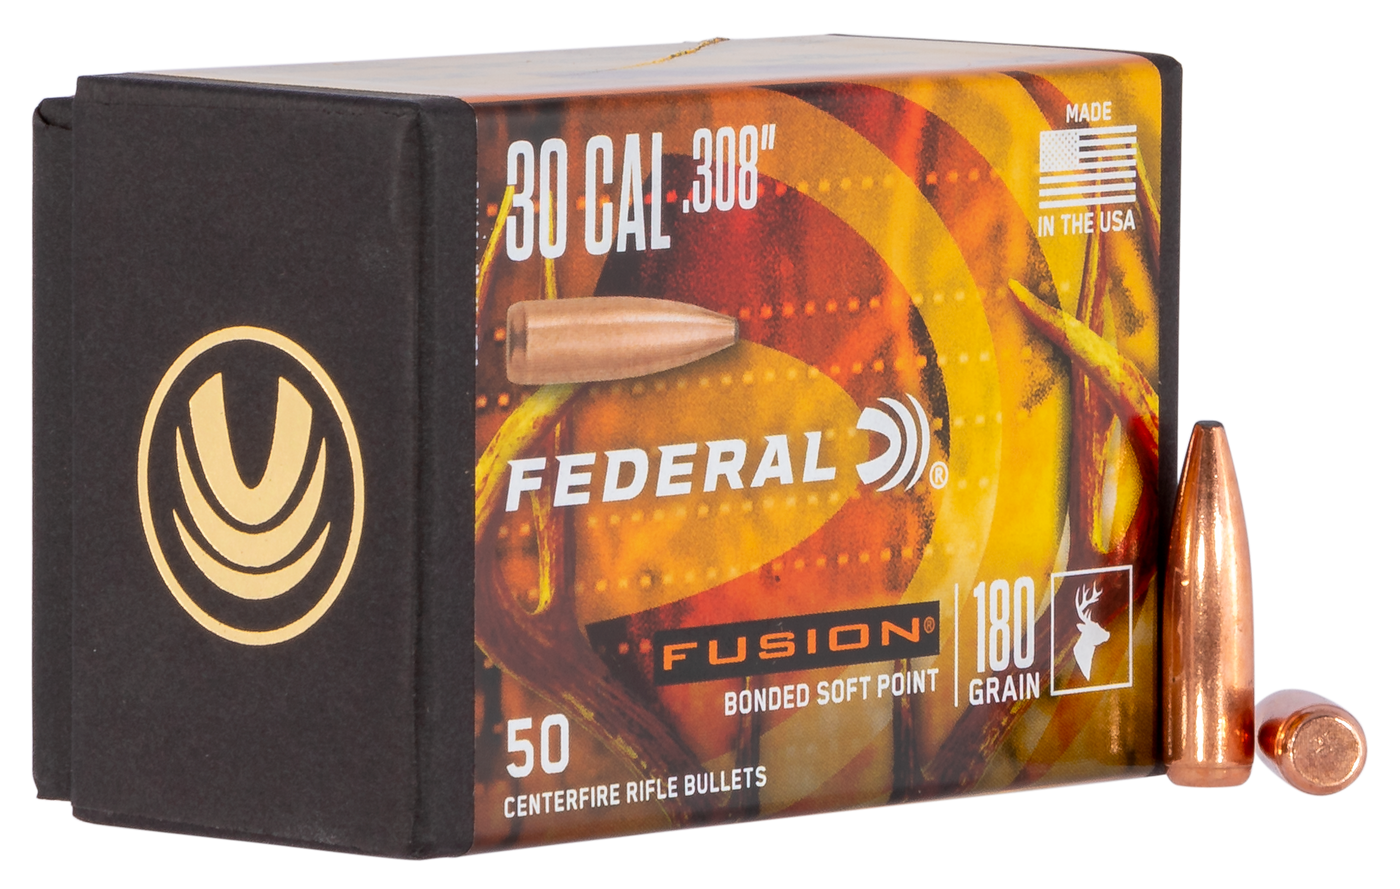 Federal Fusion Component, Fed Fb308f4     Bull .308 180fus        50/4